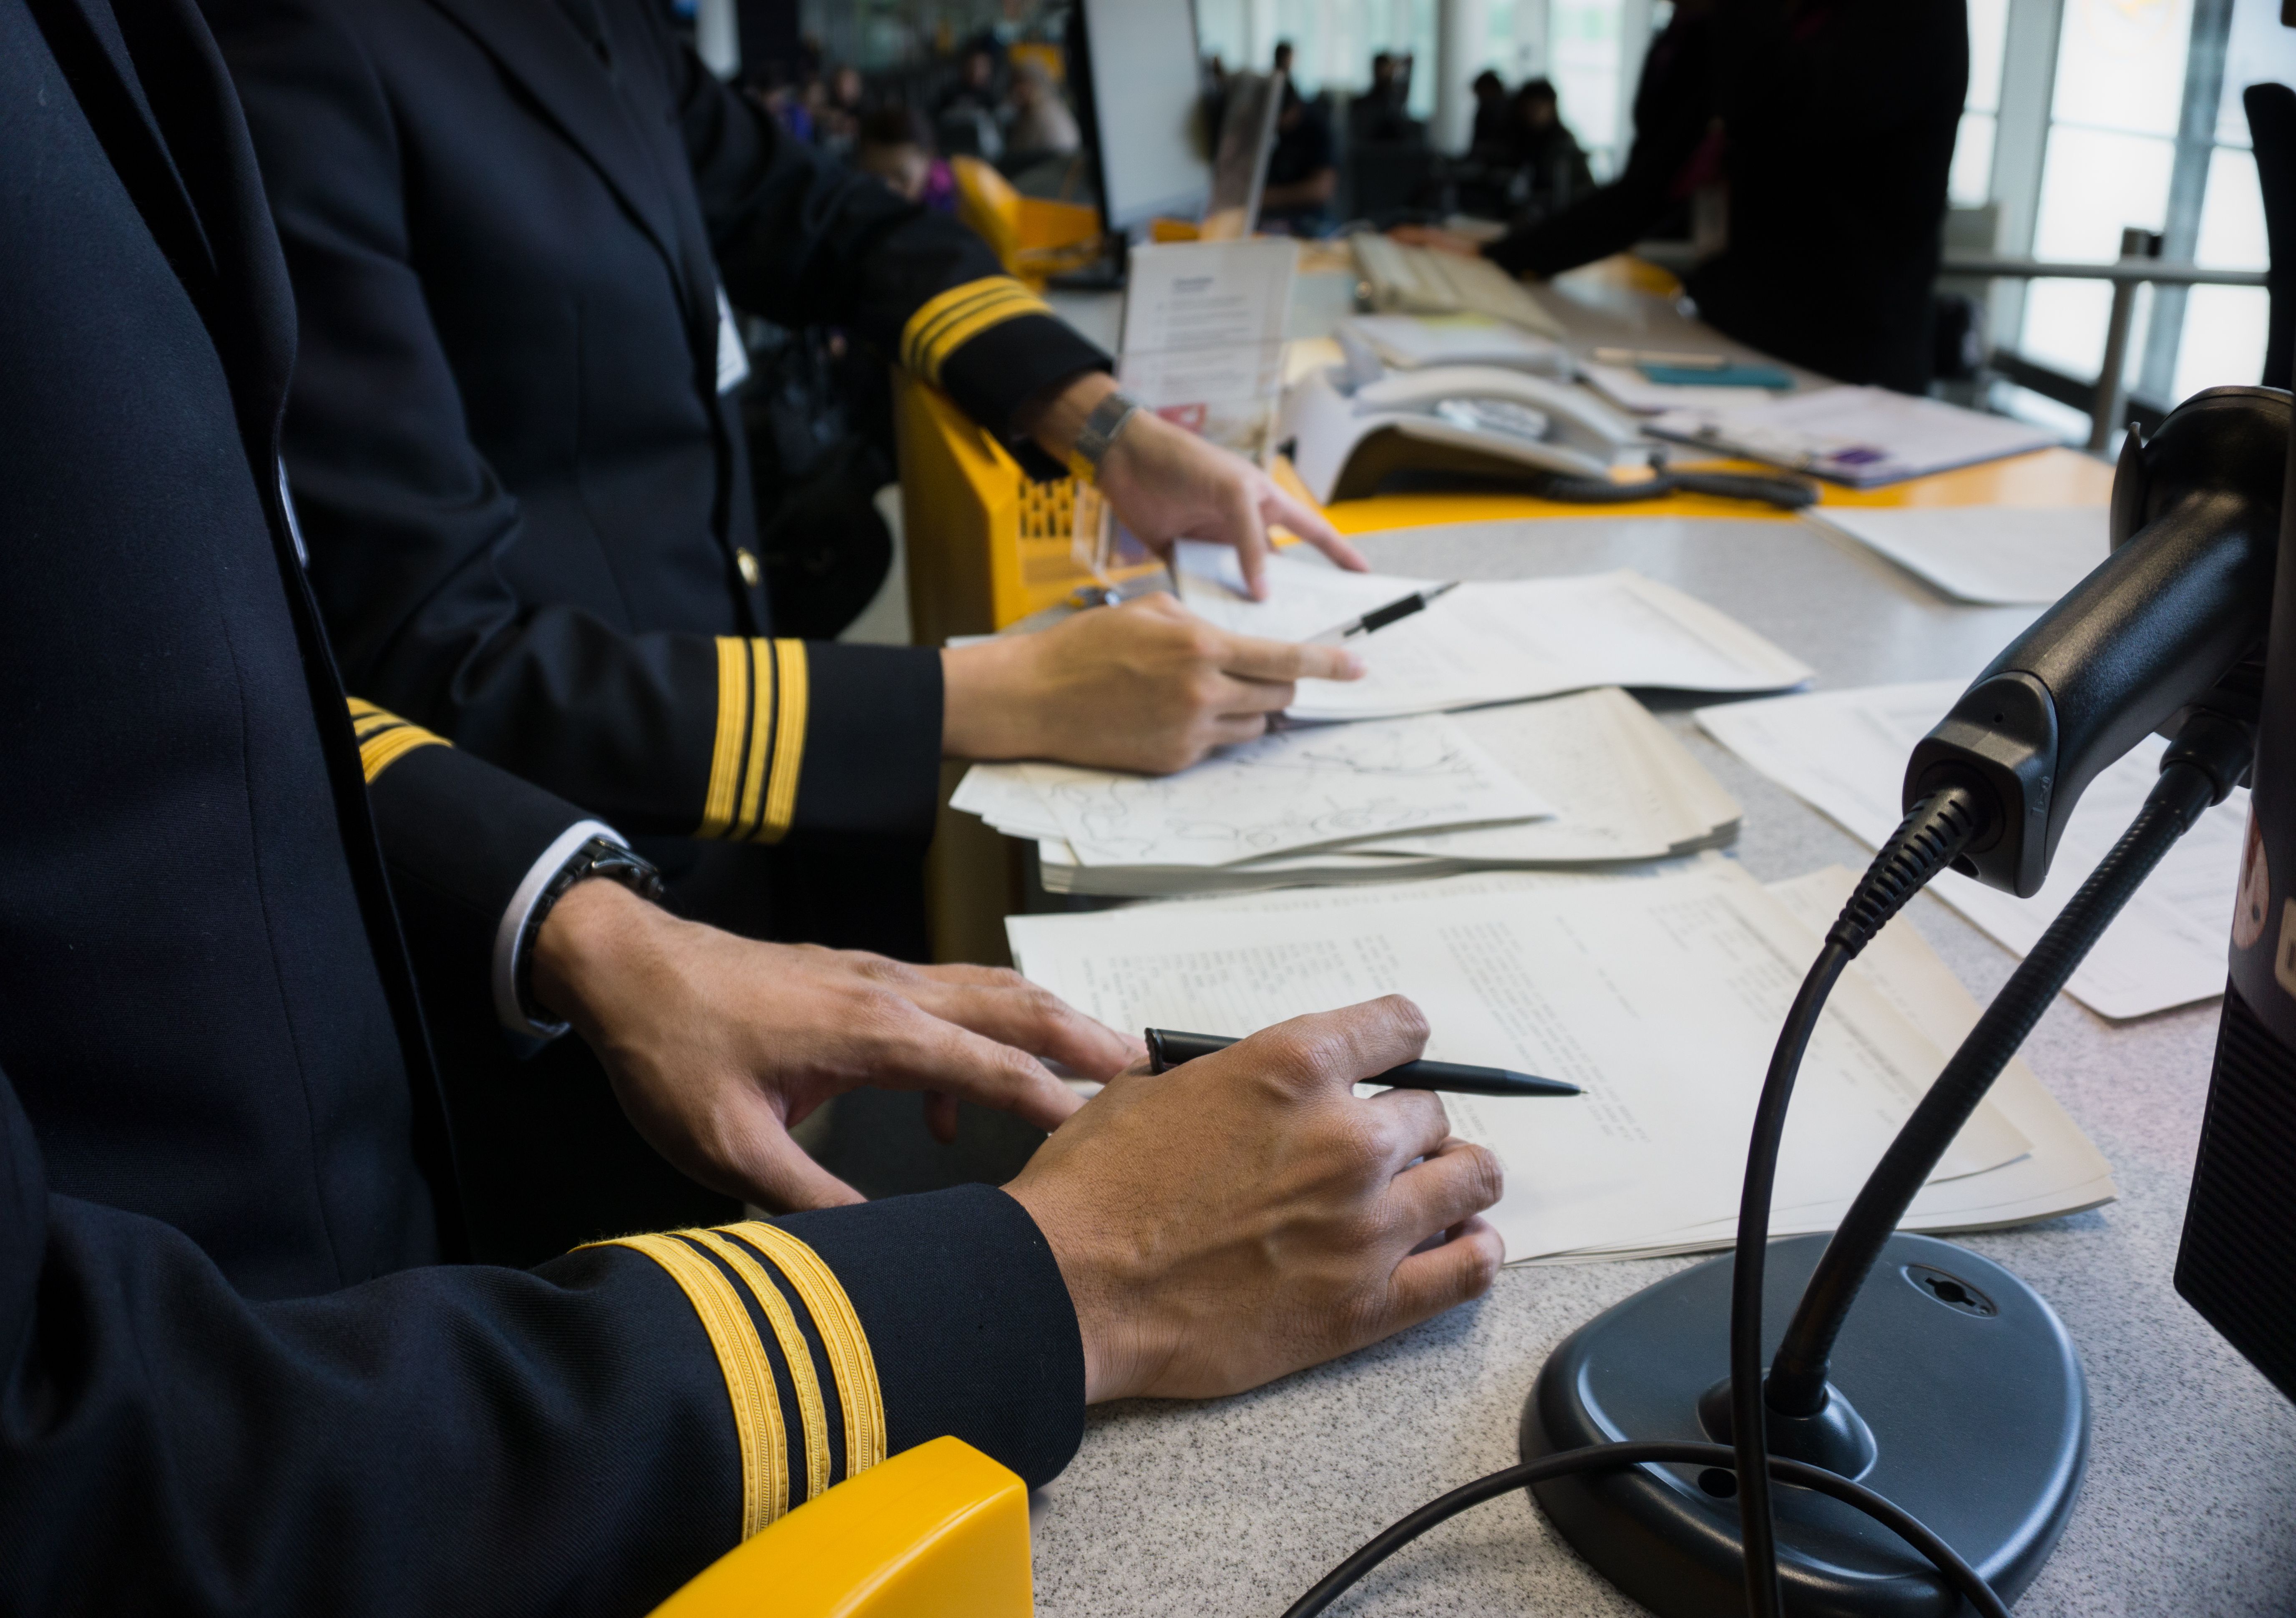 Pilots reviewing preflight documents.